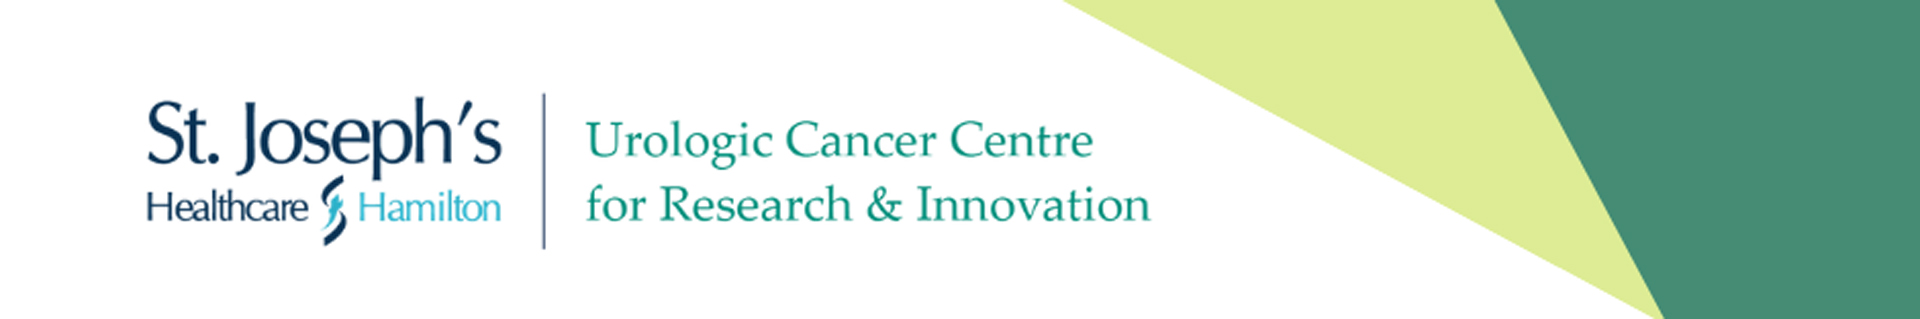 St. Joe's Urologic Cancer Centre for Research & Innovation cannabis survey study